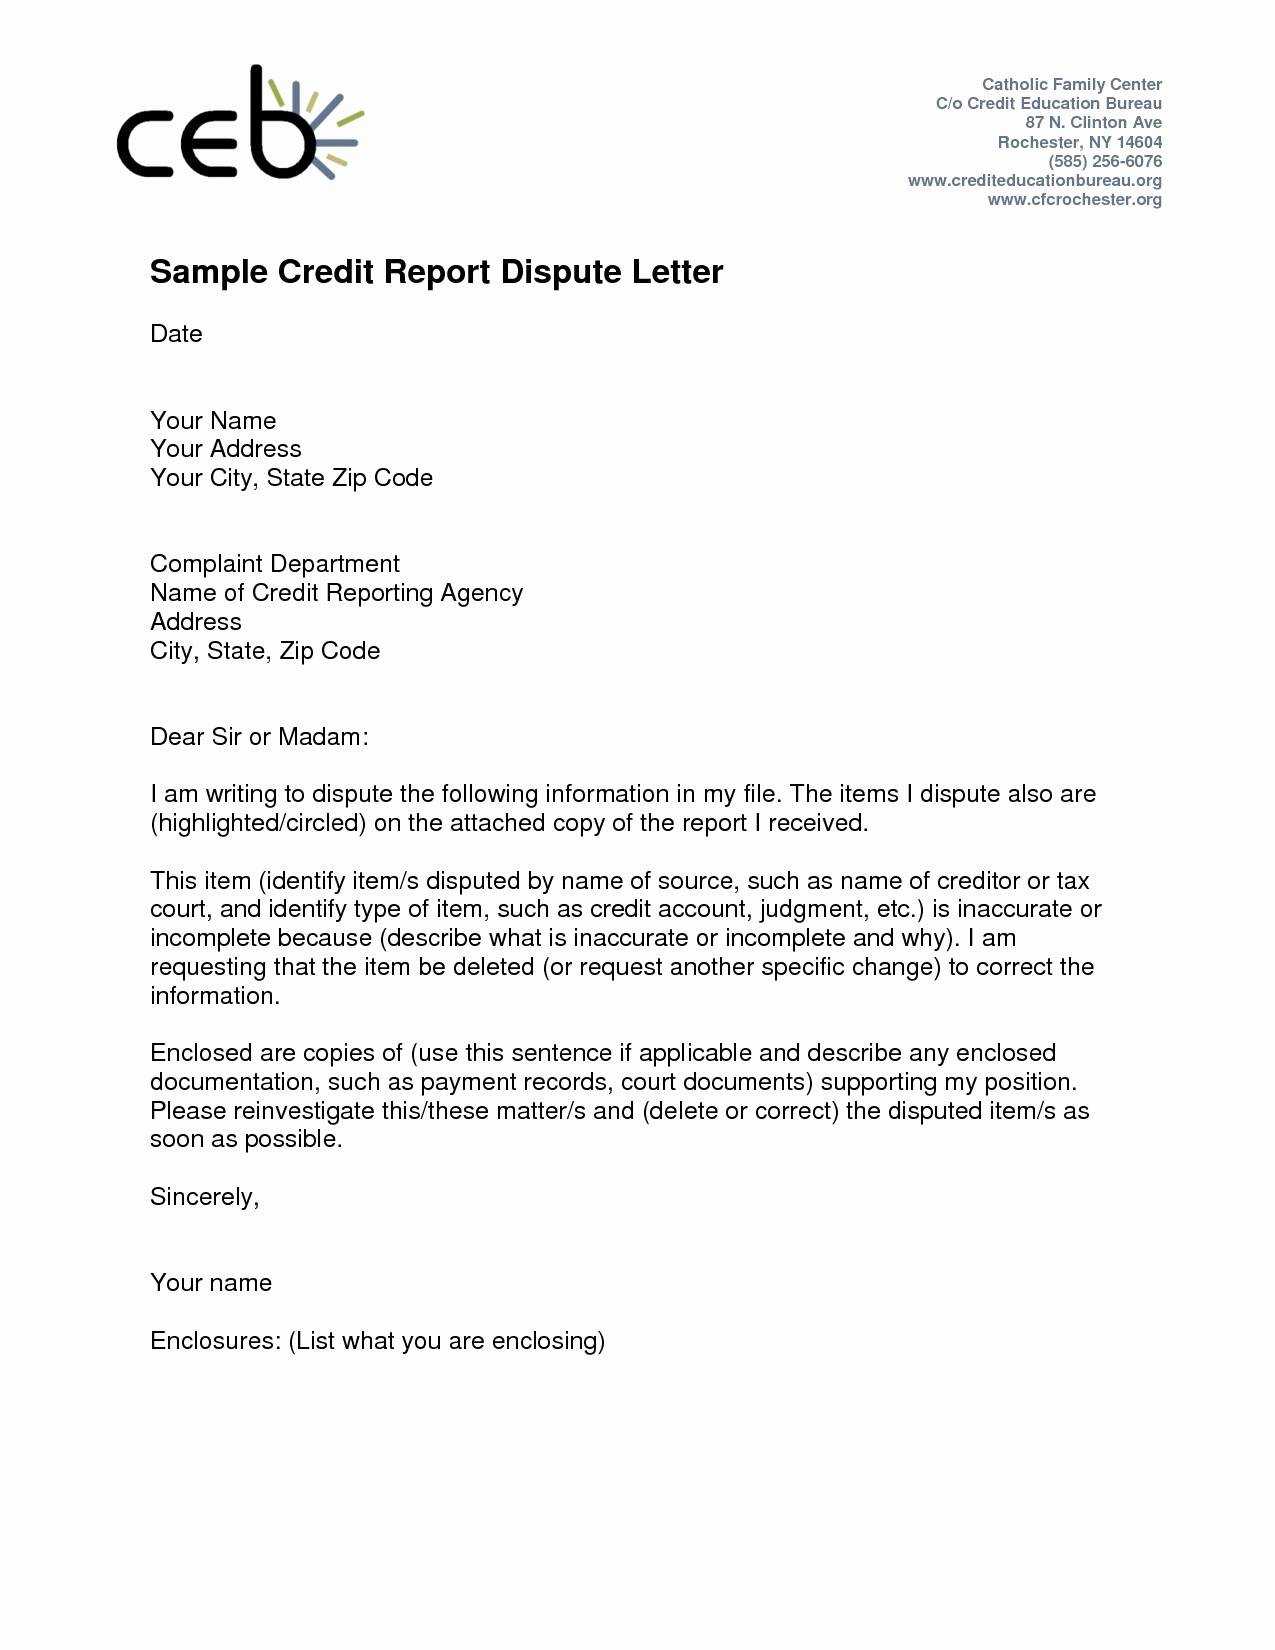 Credit Dispute Templates - Zohre.horizonconsulting.co Regarding Credit Report Dispute Letter Template